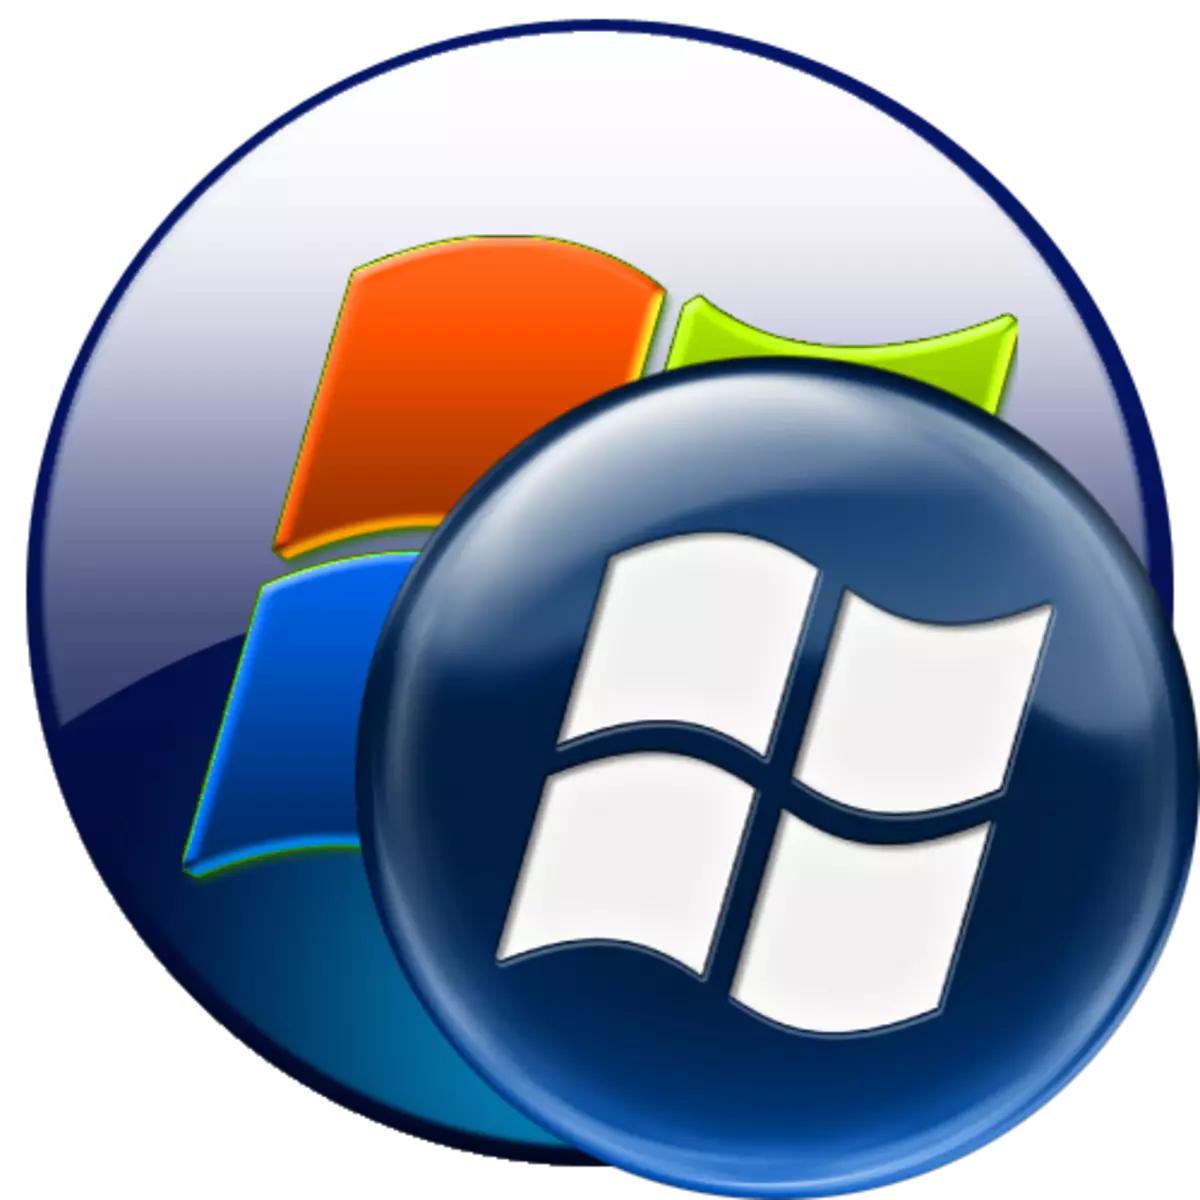 Windows 7 లో స్వాగత విండోను బూట్ చేసేటప్పుడు ఉరి